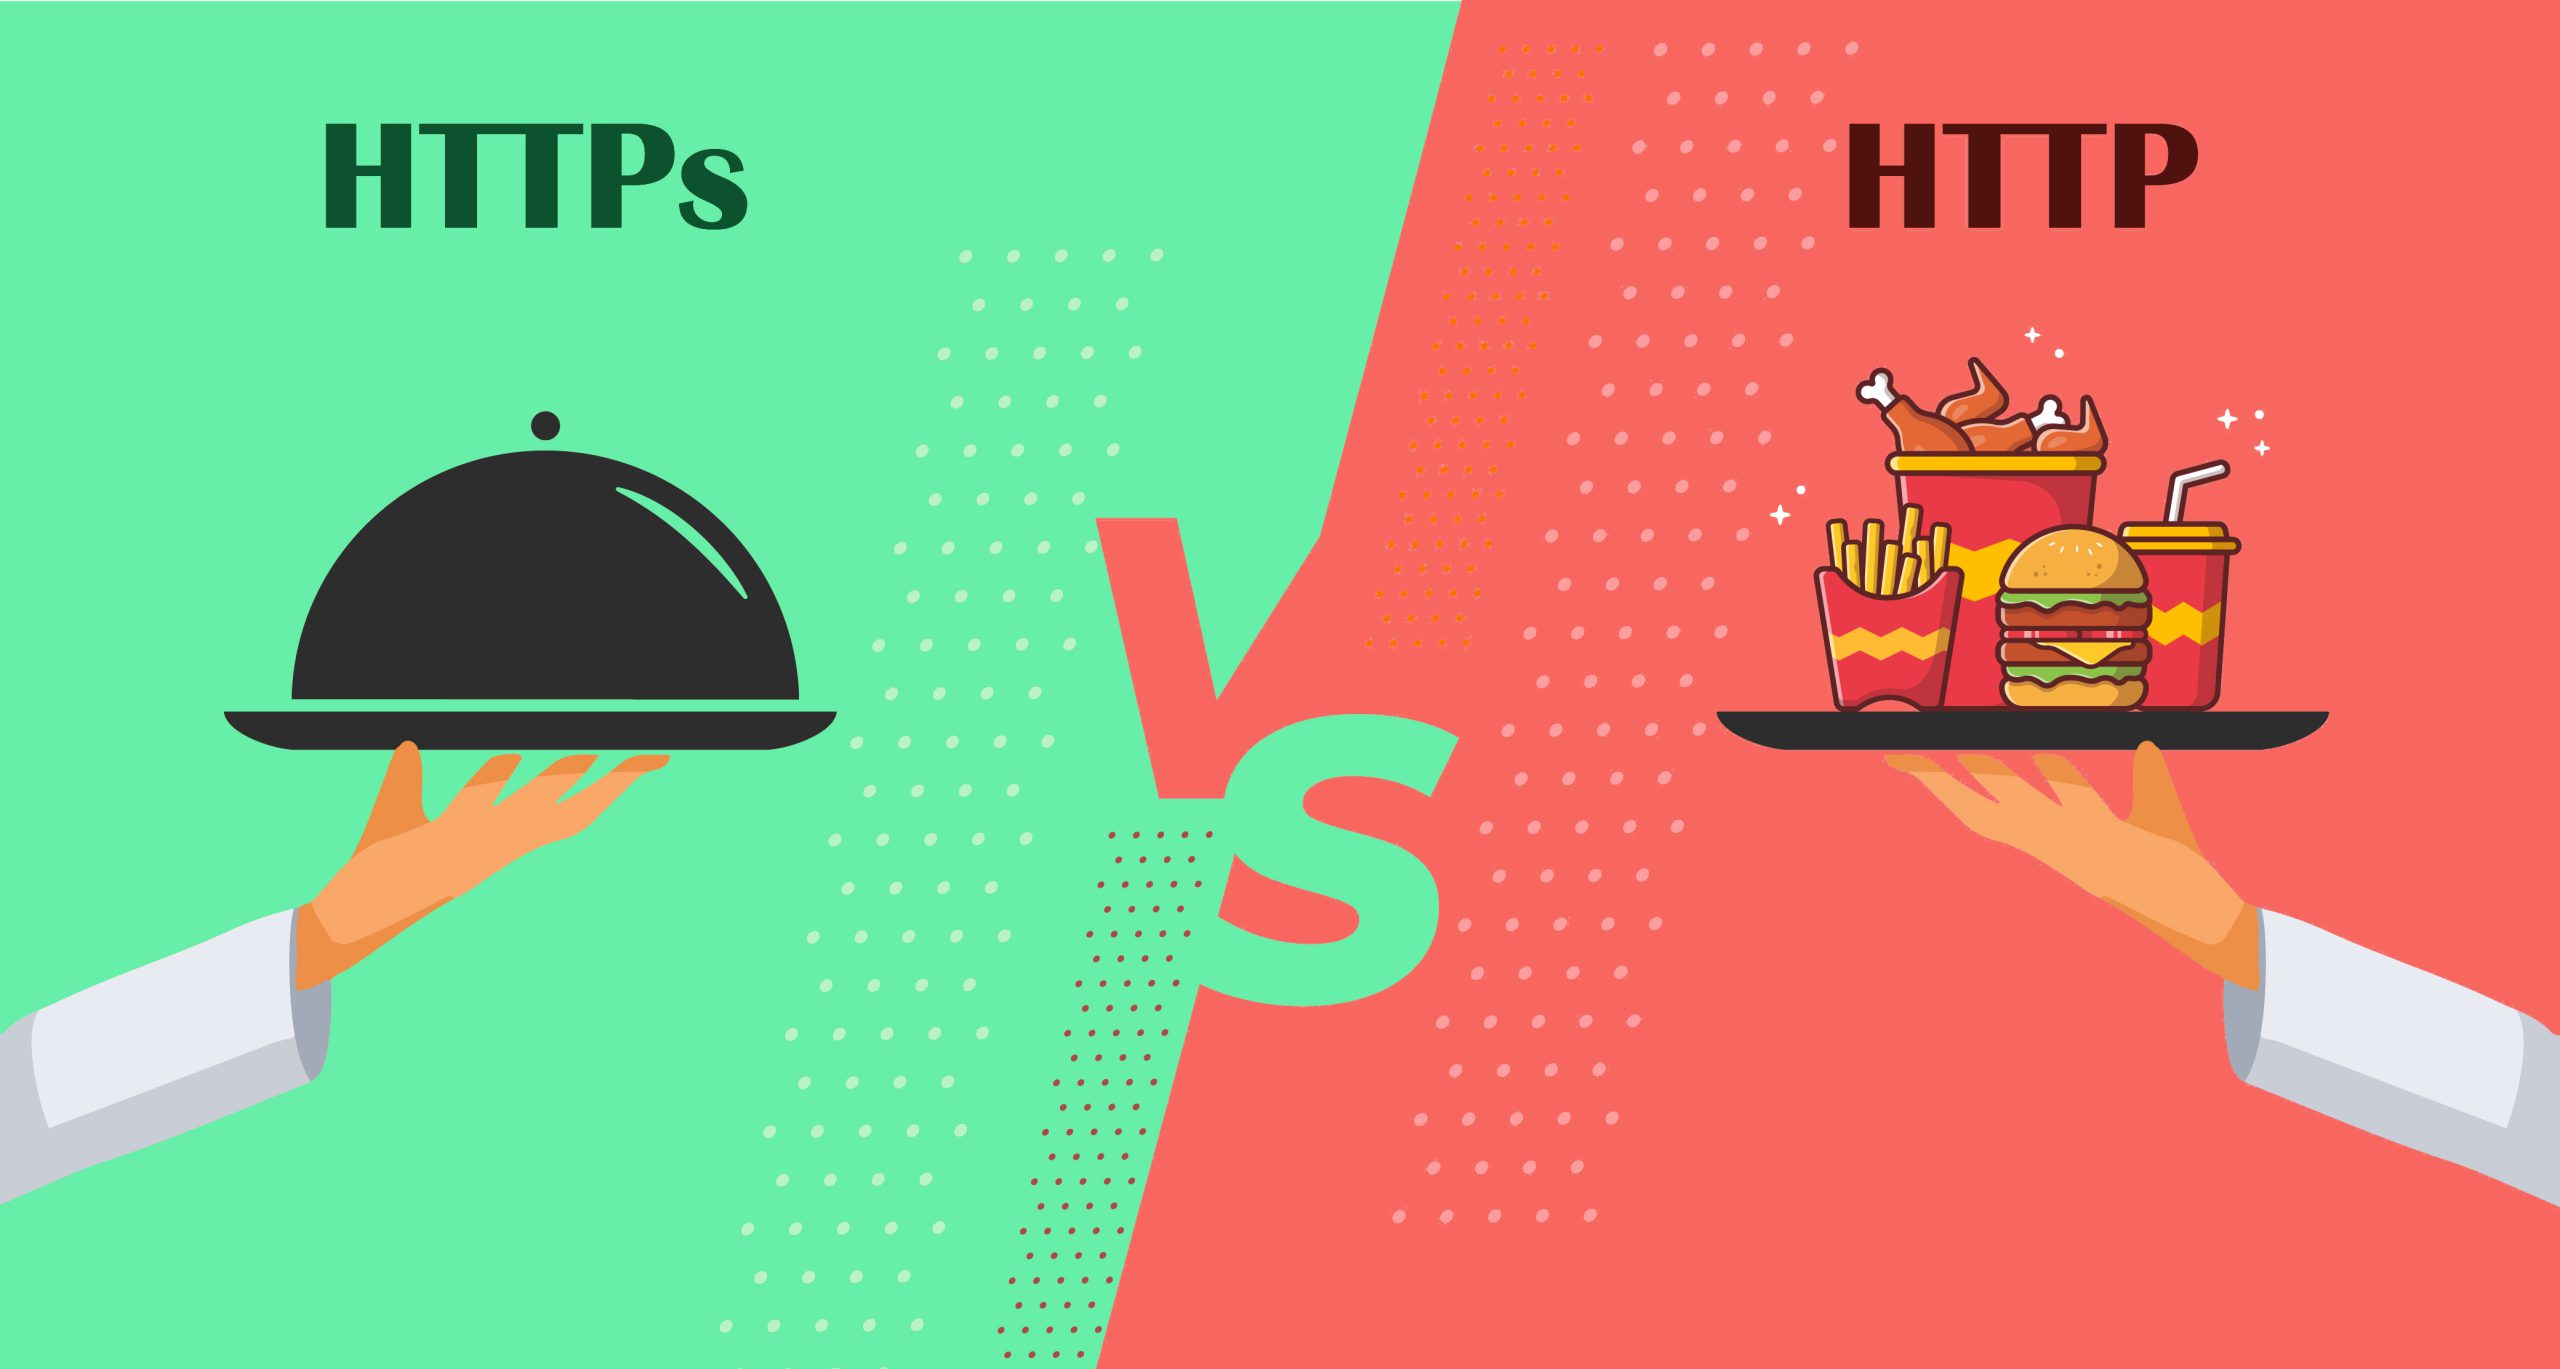 تفاوت HTTP و HTTPS